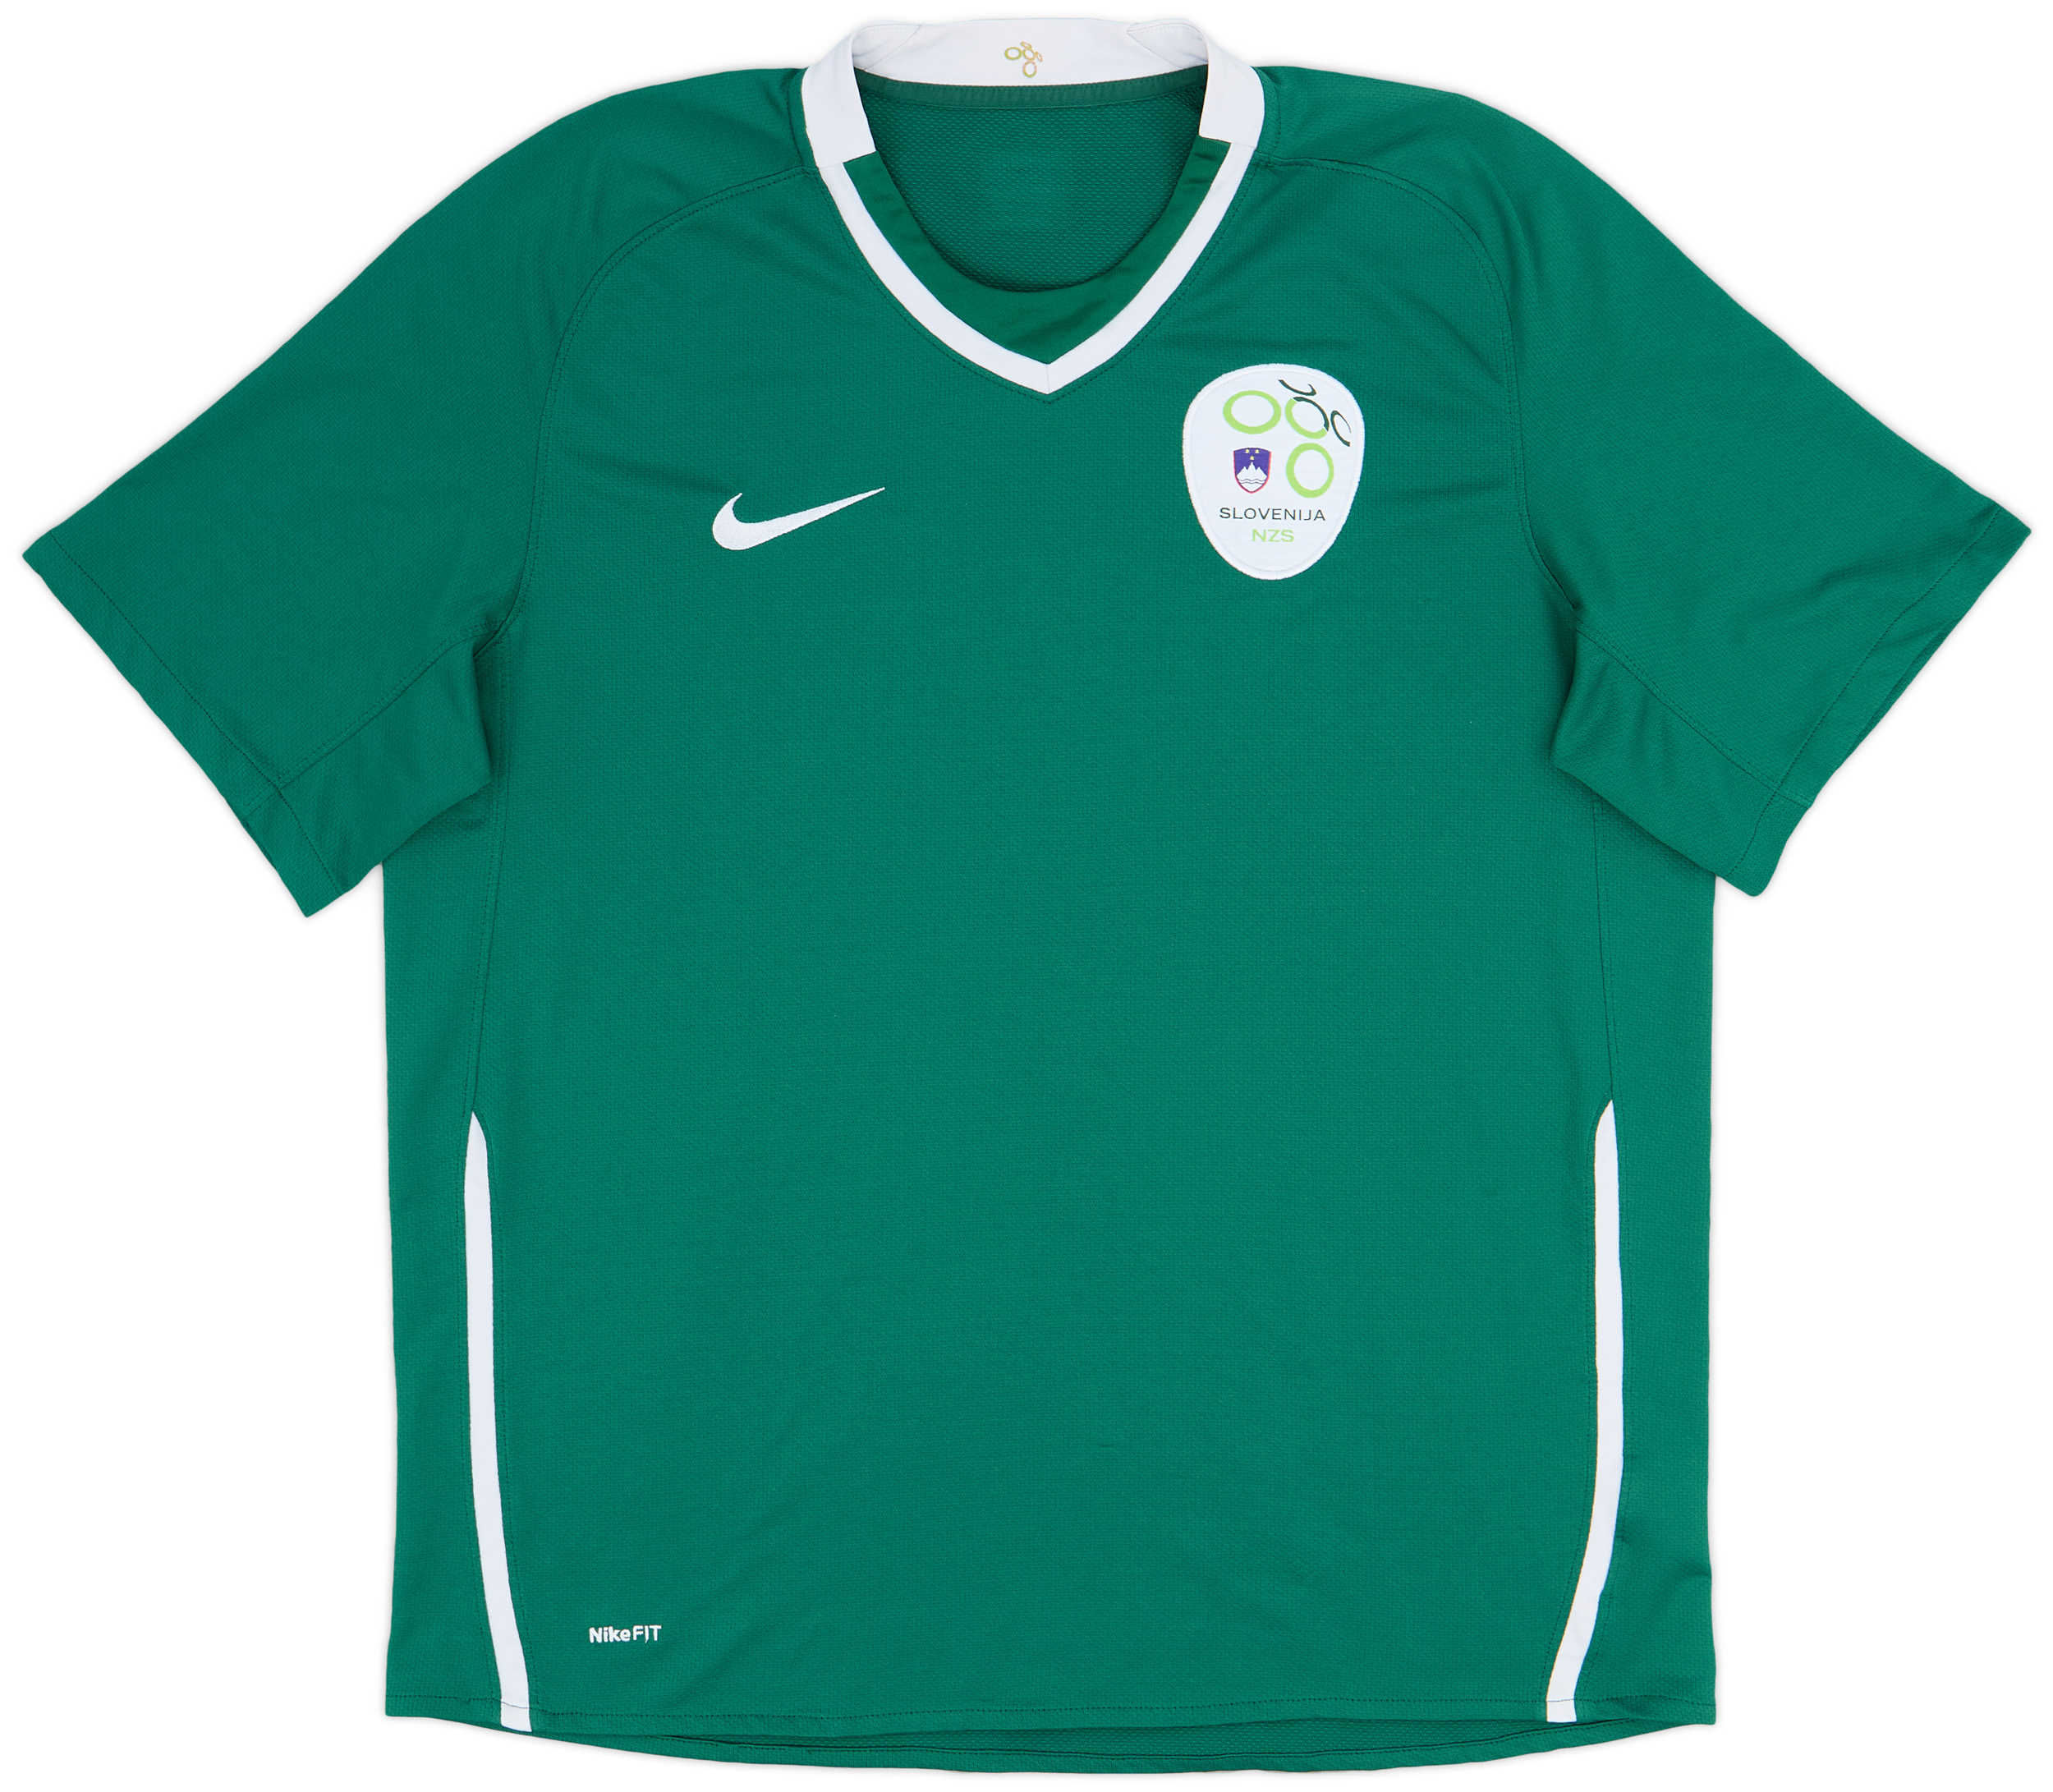 2008-10 Slovenia Away Shirt - 8/10 - ()